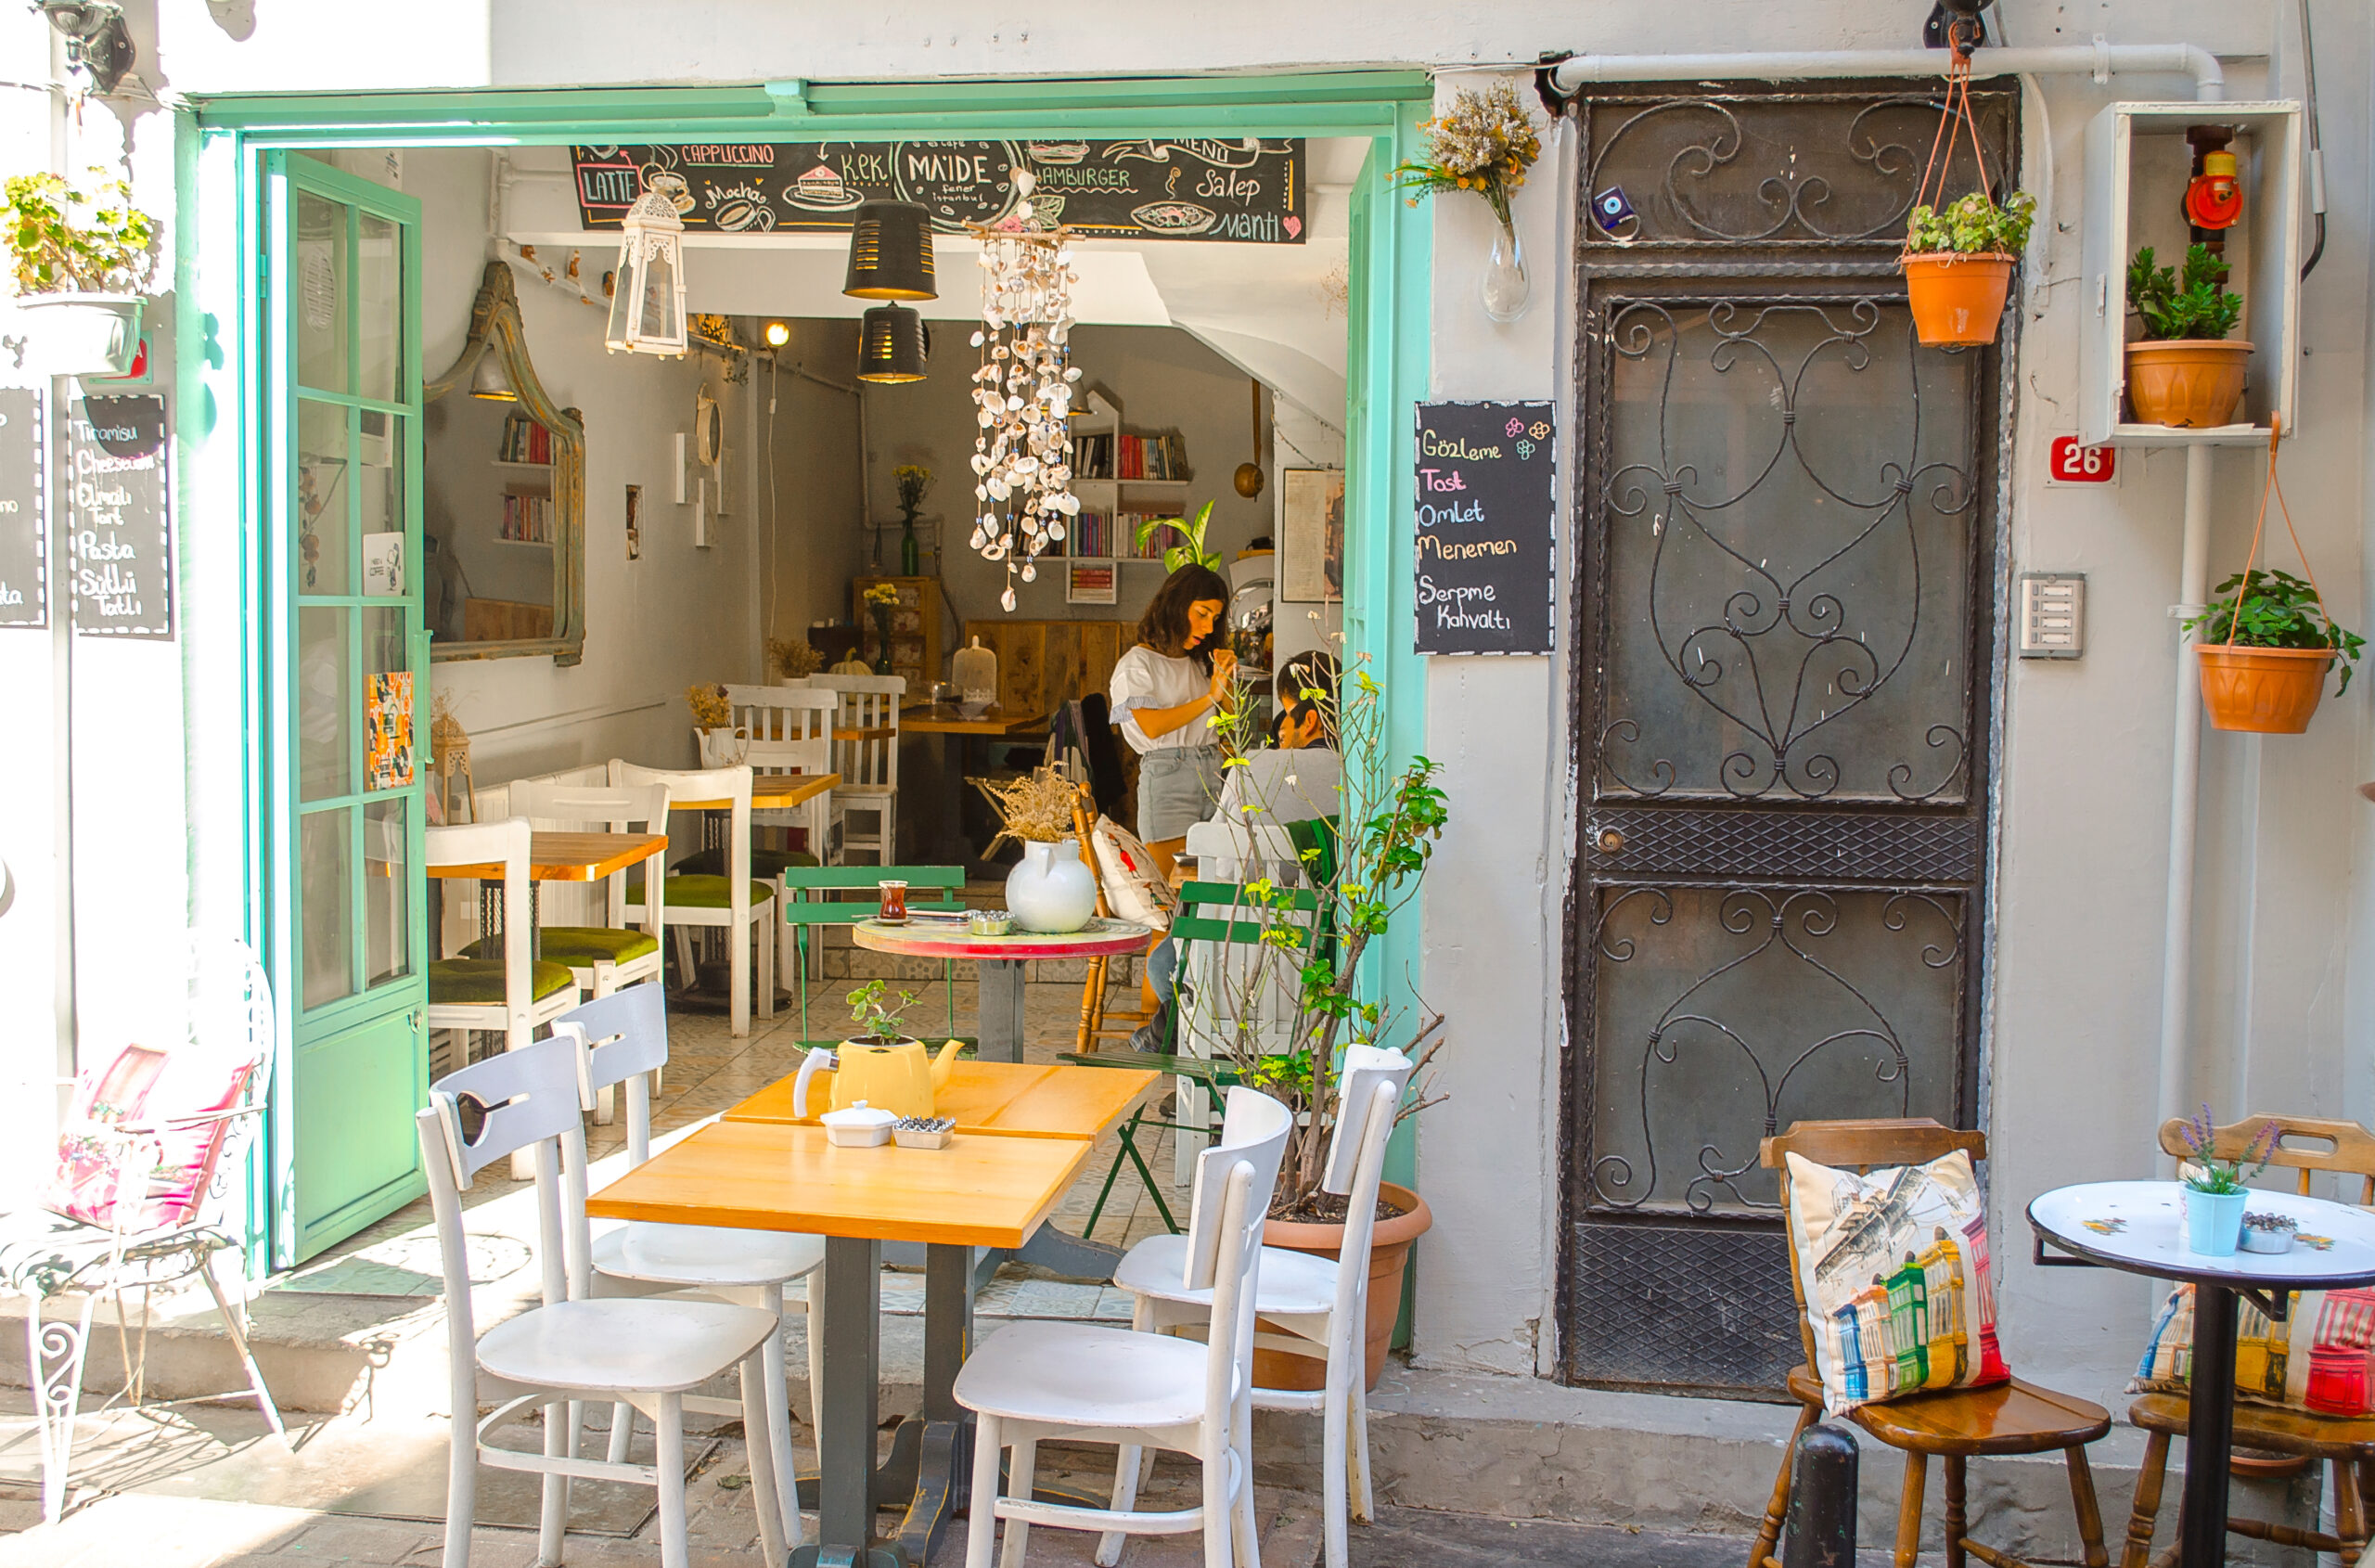 Local celebrity chef opening Portuguese-inspired cafe in Bristol | WPRI.com